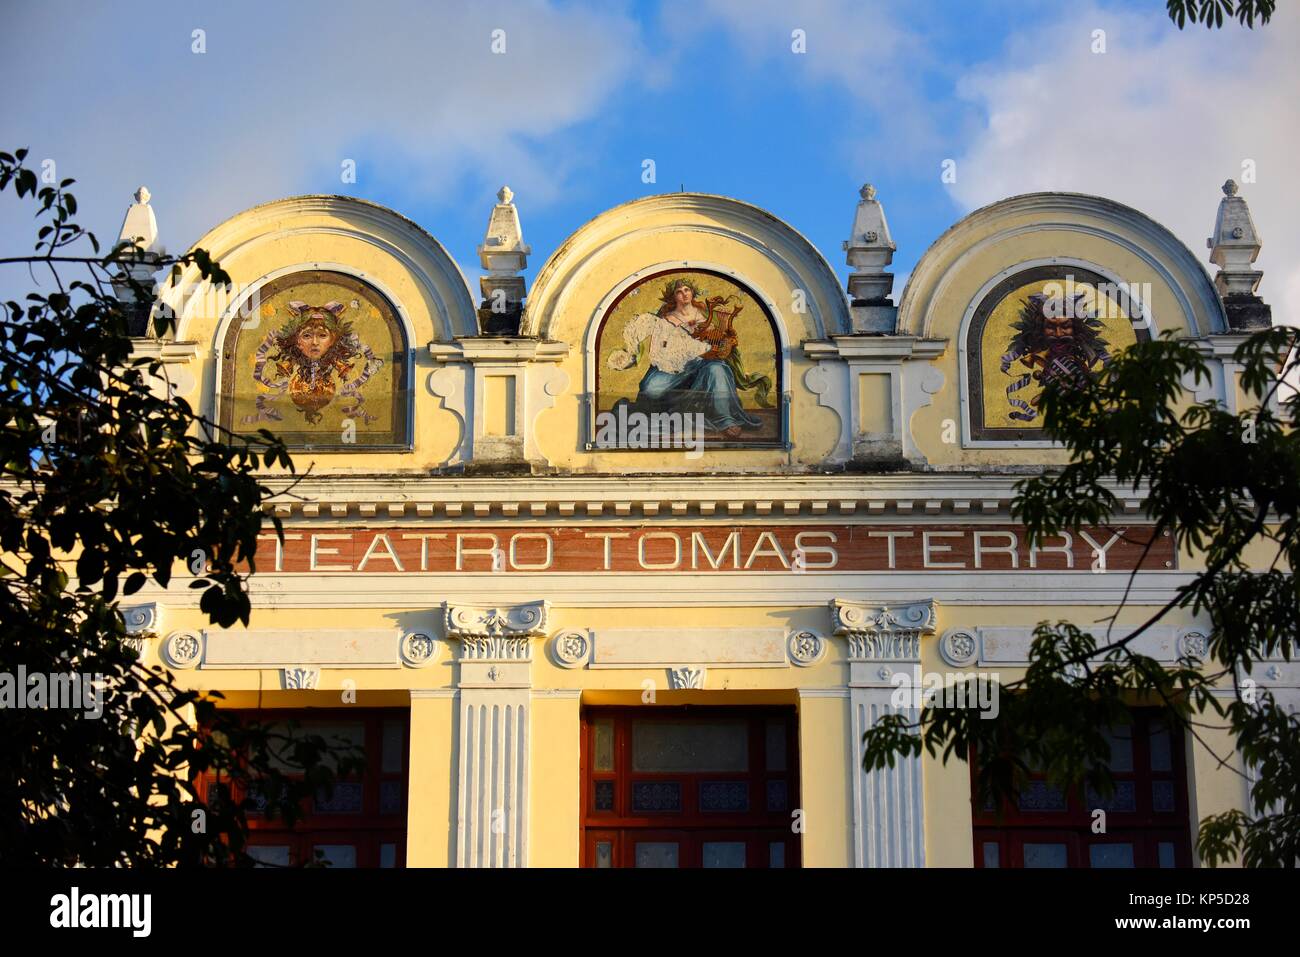 Theater Tomas Terry building in Cienfuegos, Cuba. Stock Photo